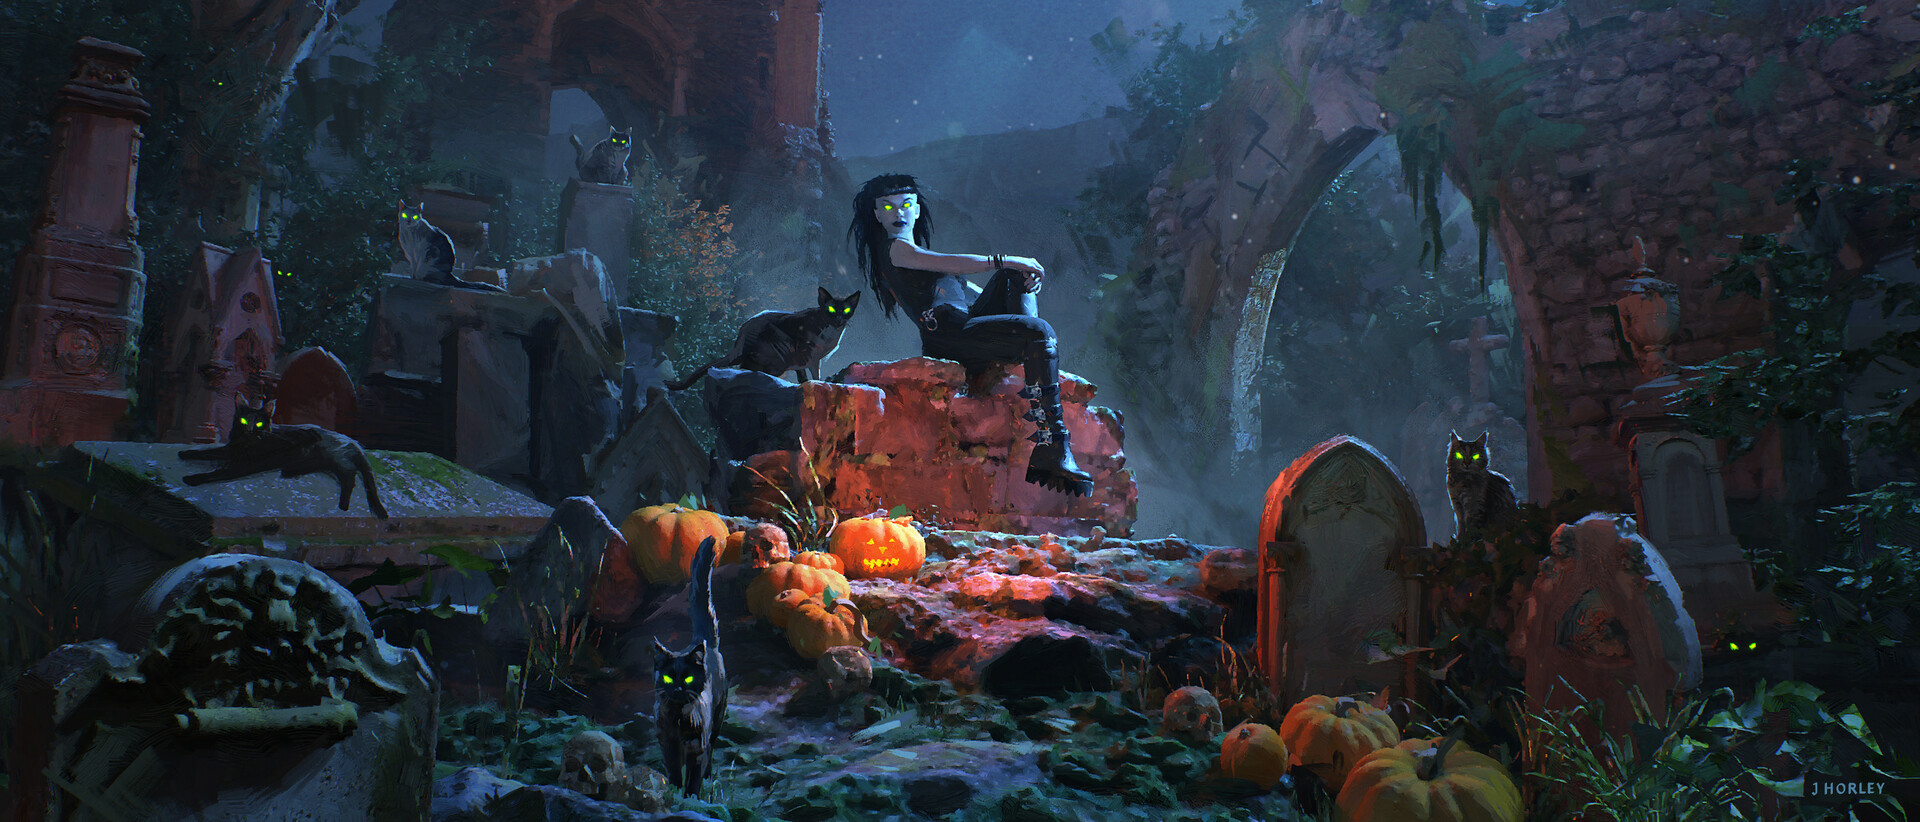 A Big, Spooky Halloween Dump